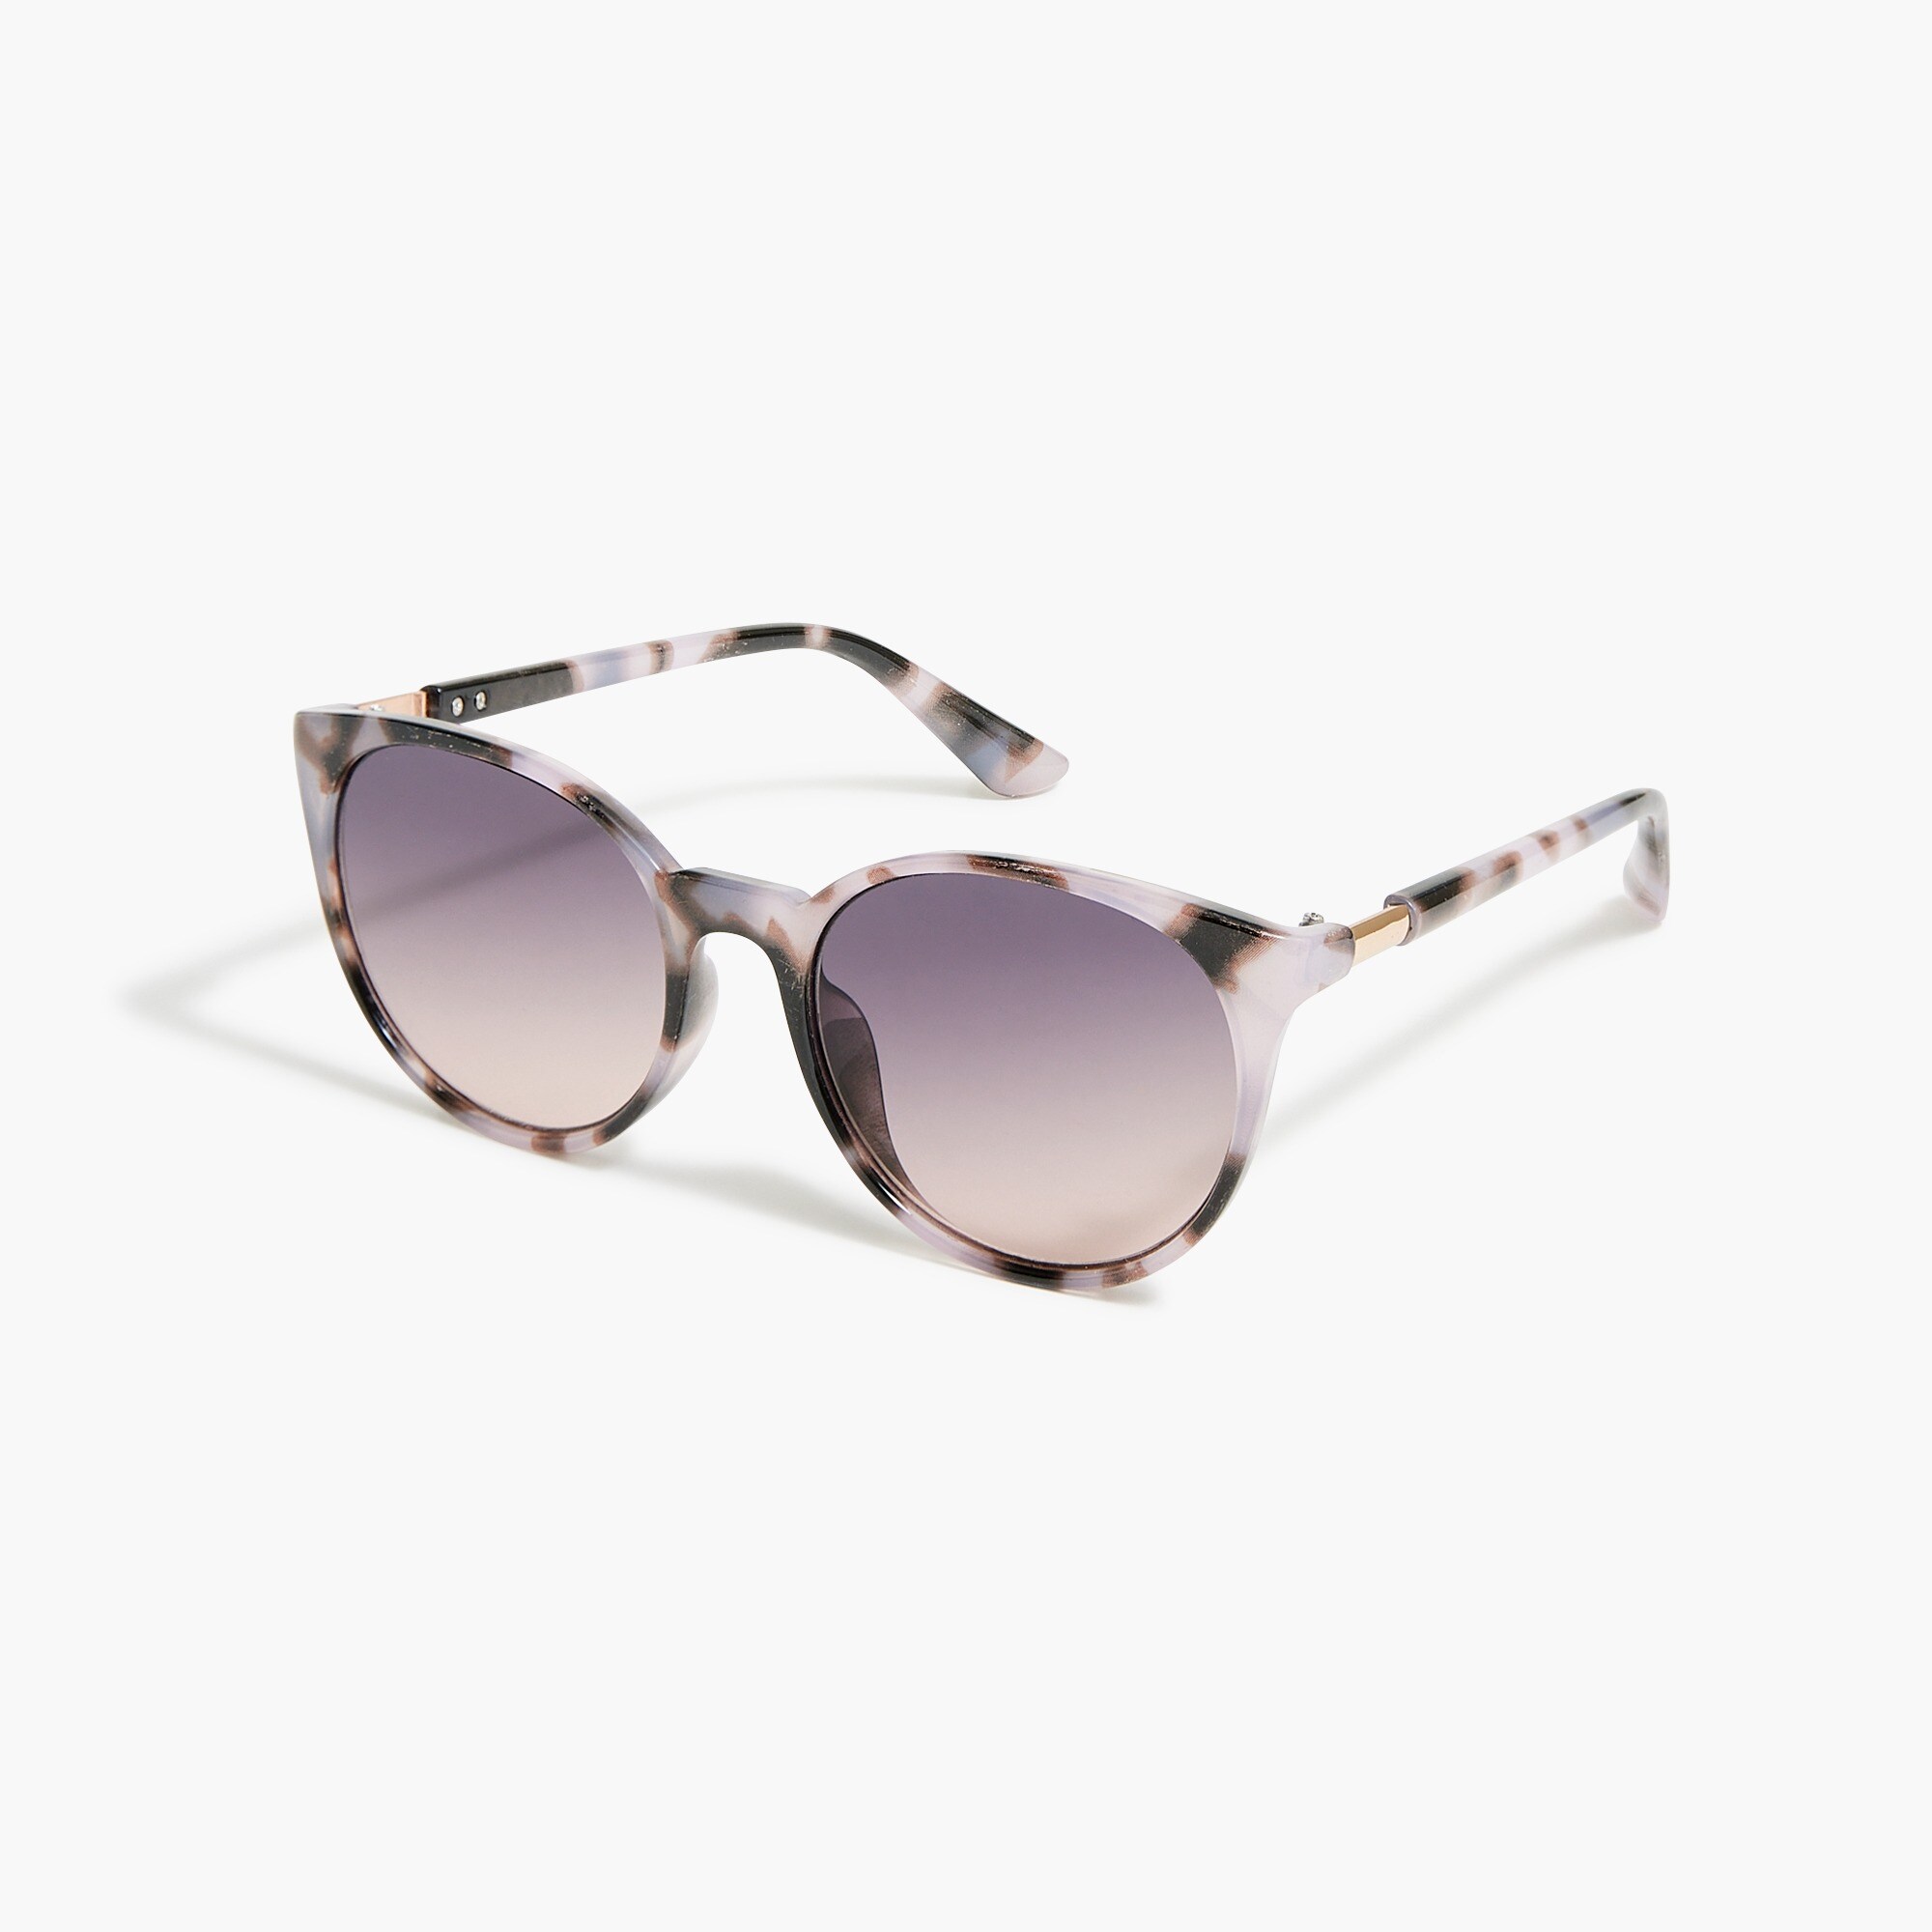  Rounded-frame sunglasses